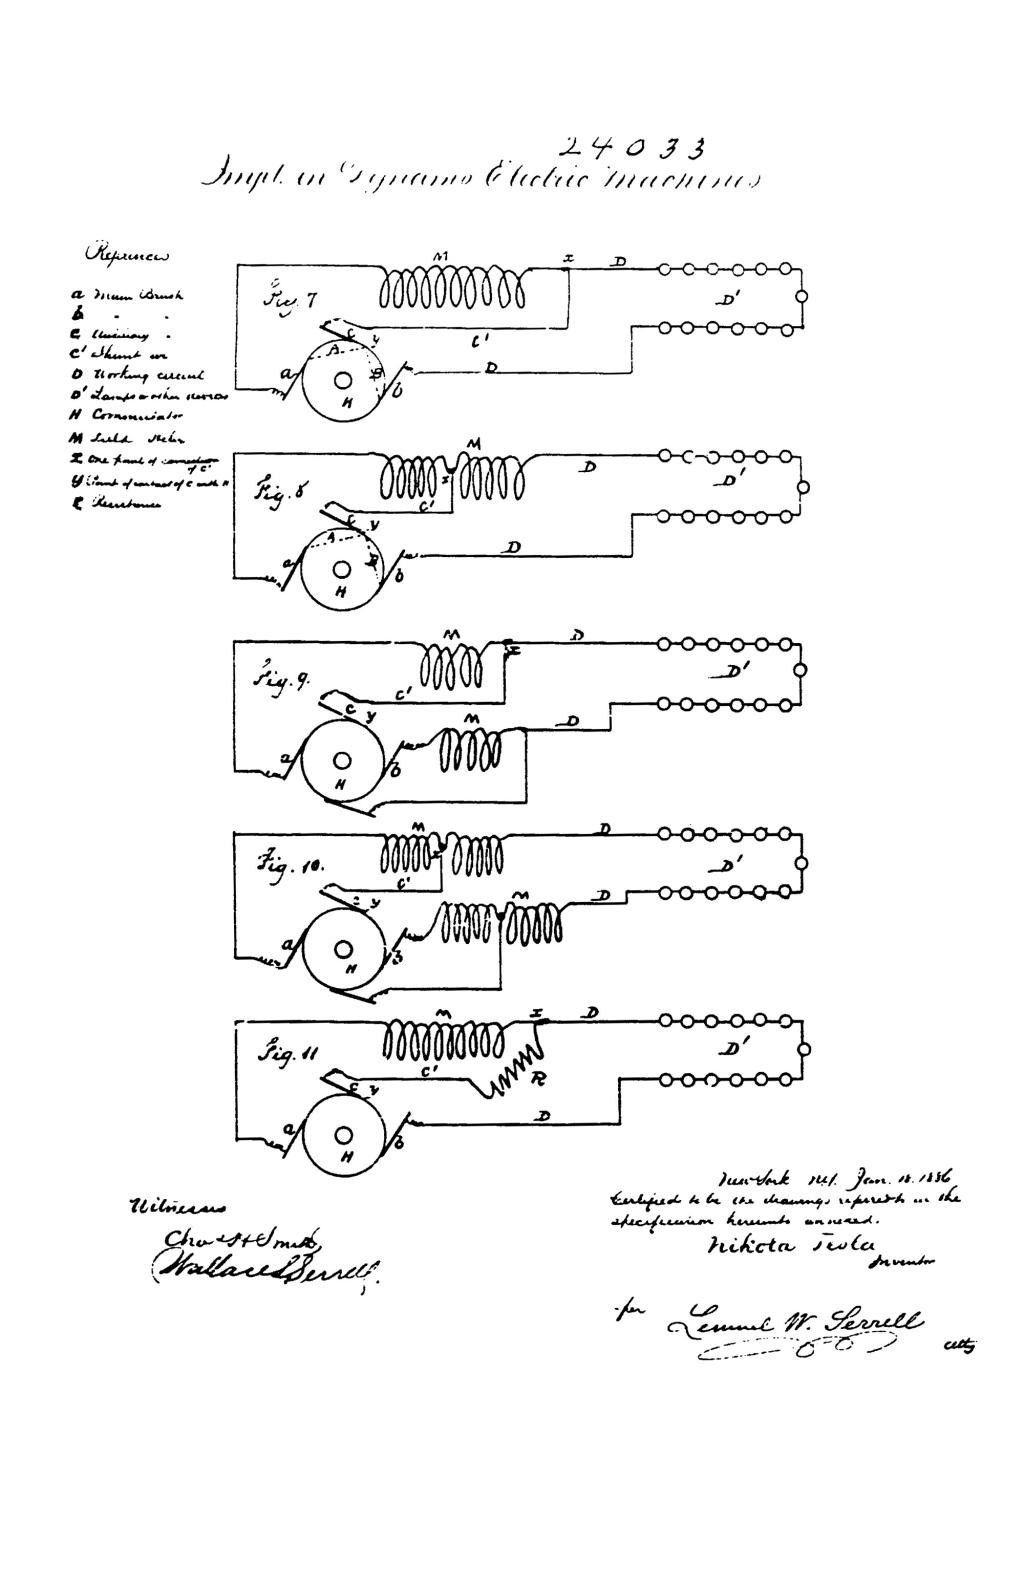 Nikola Tesla Canadian Patent 24033 - Dynamo Electric Machine - Image 1